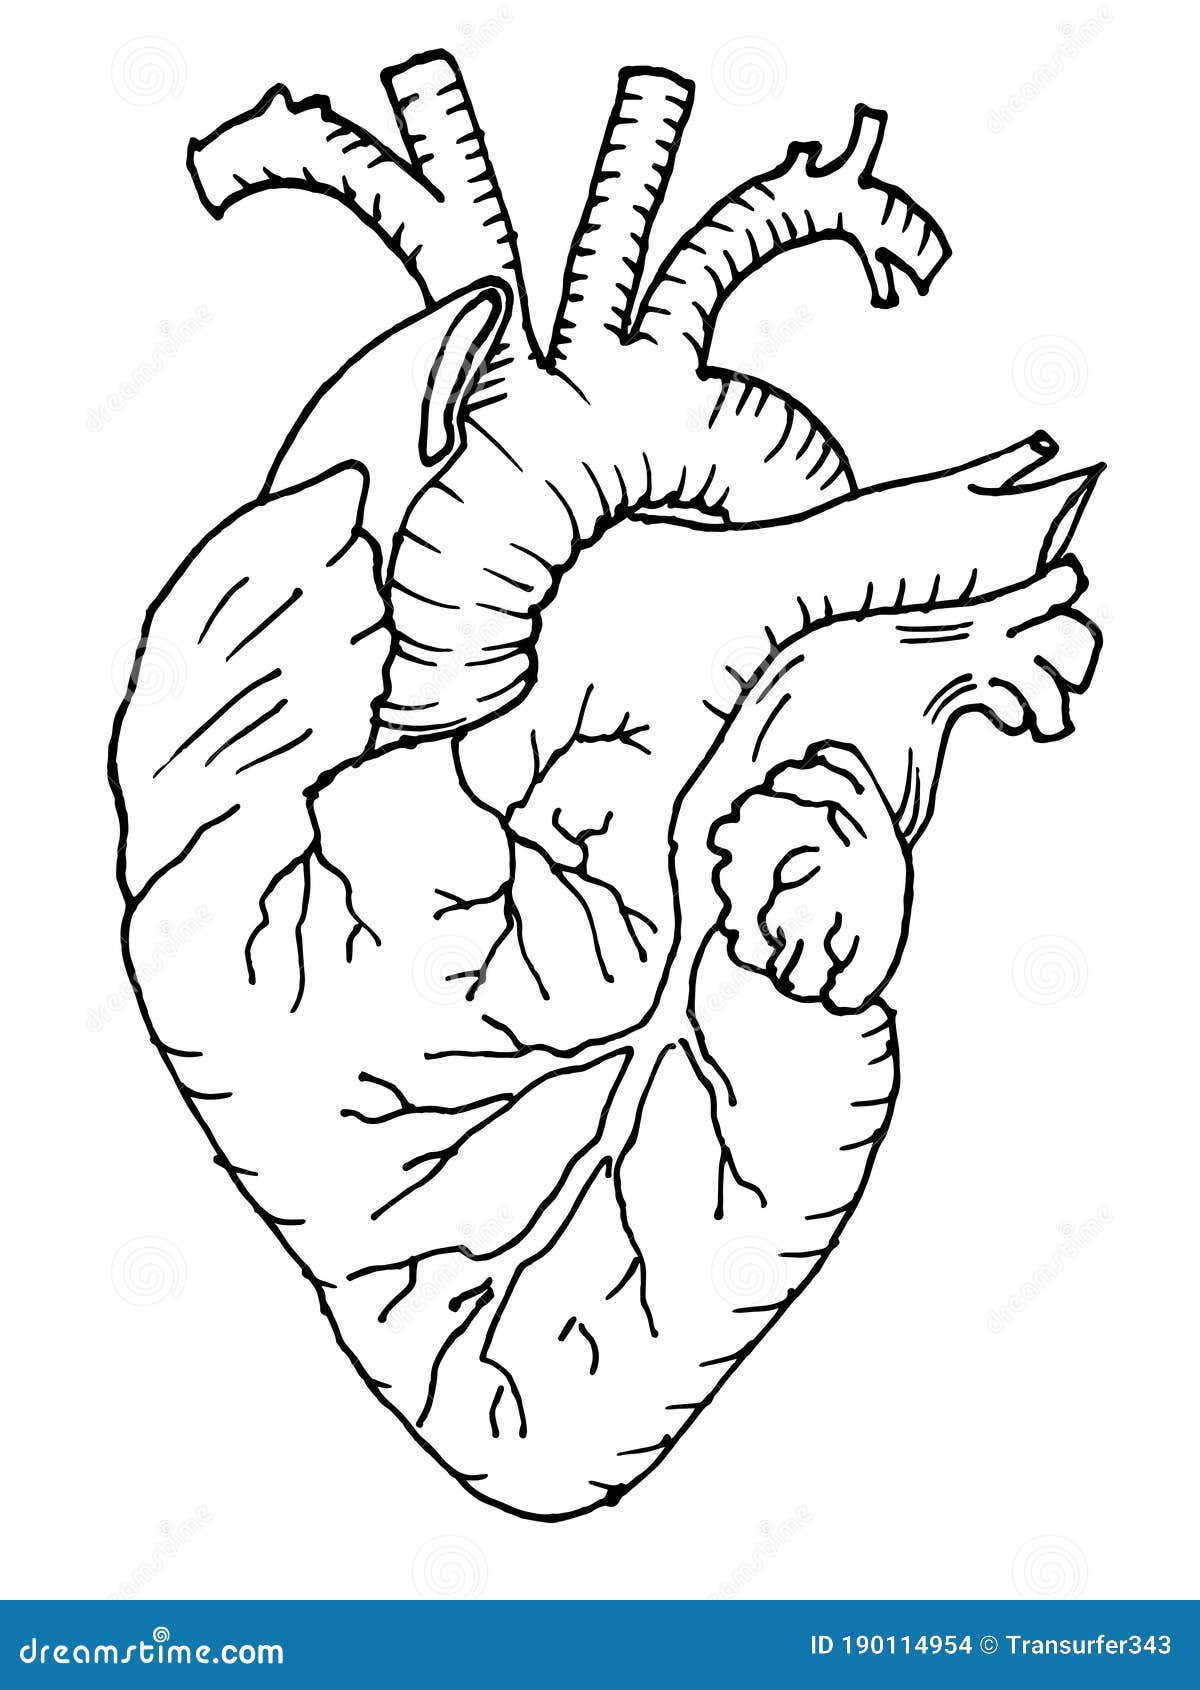 human heart sketch by vegetarules101 on DeviantArt-saigonsouth.com.vn